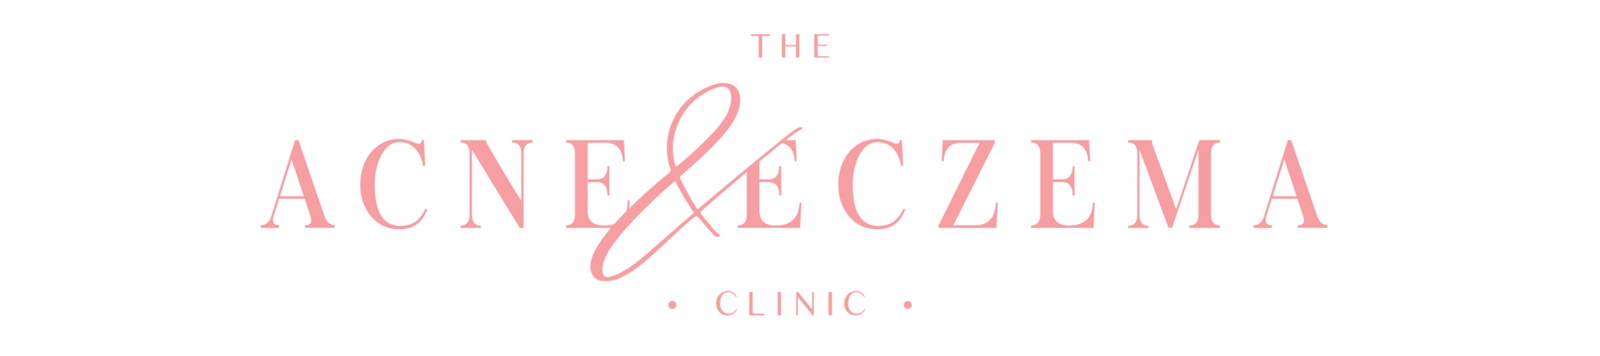 The Acne & Eczema Clinic